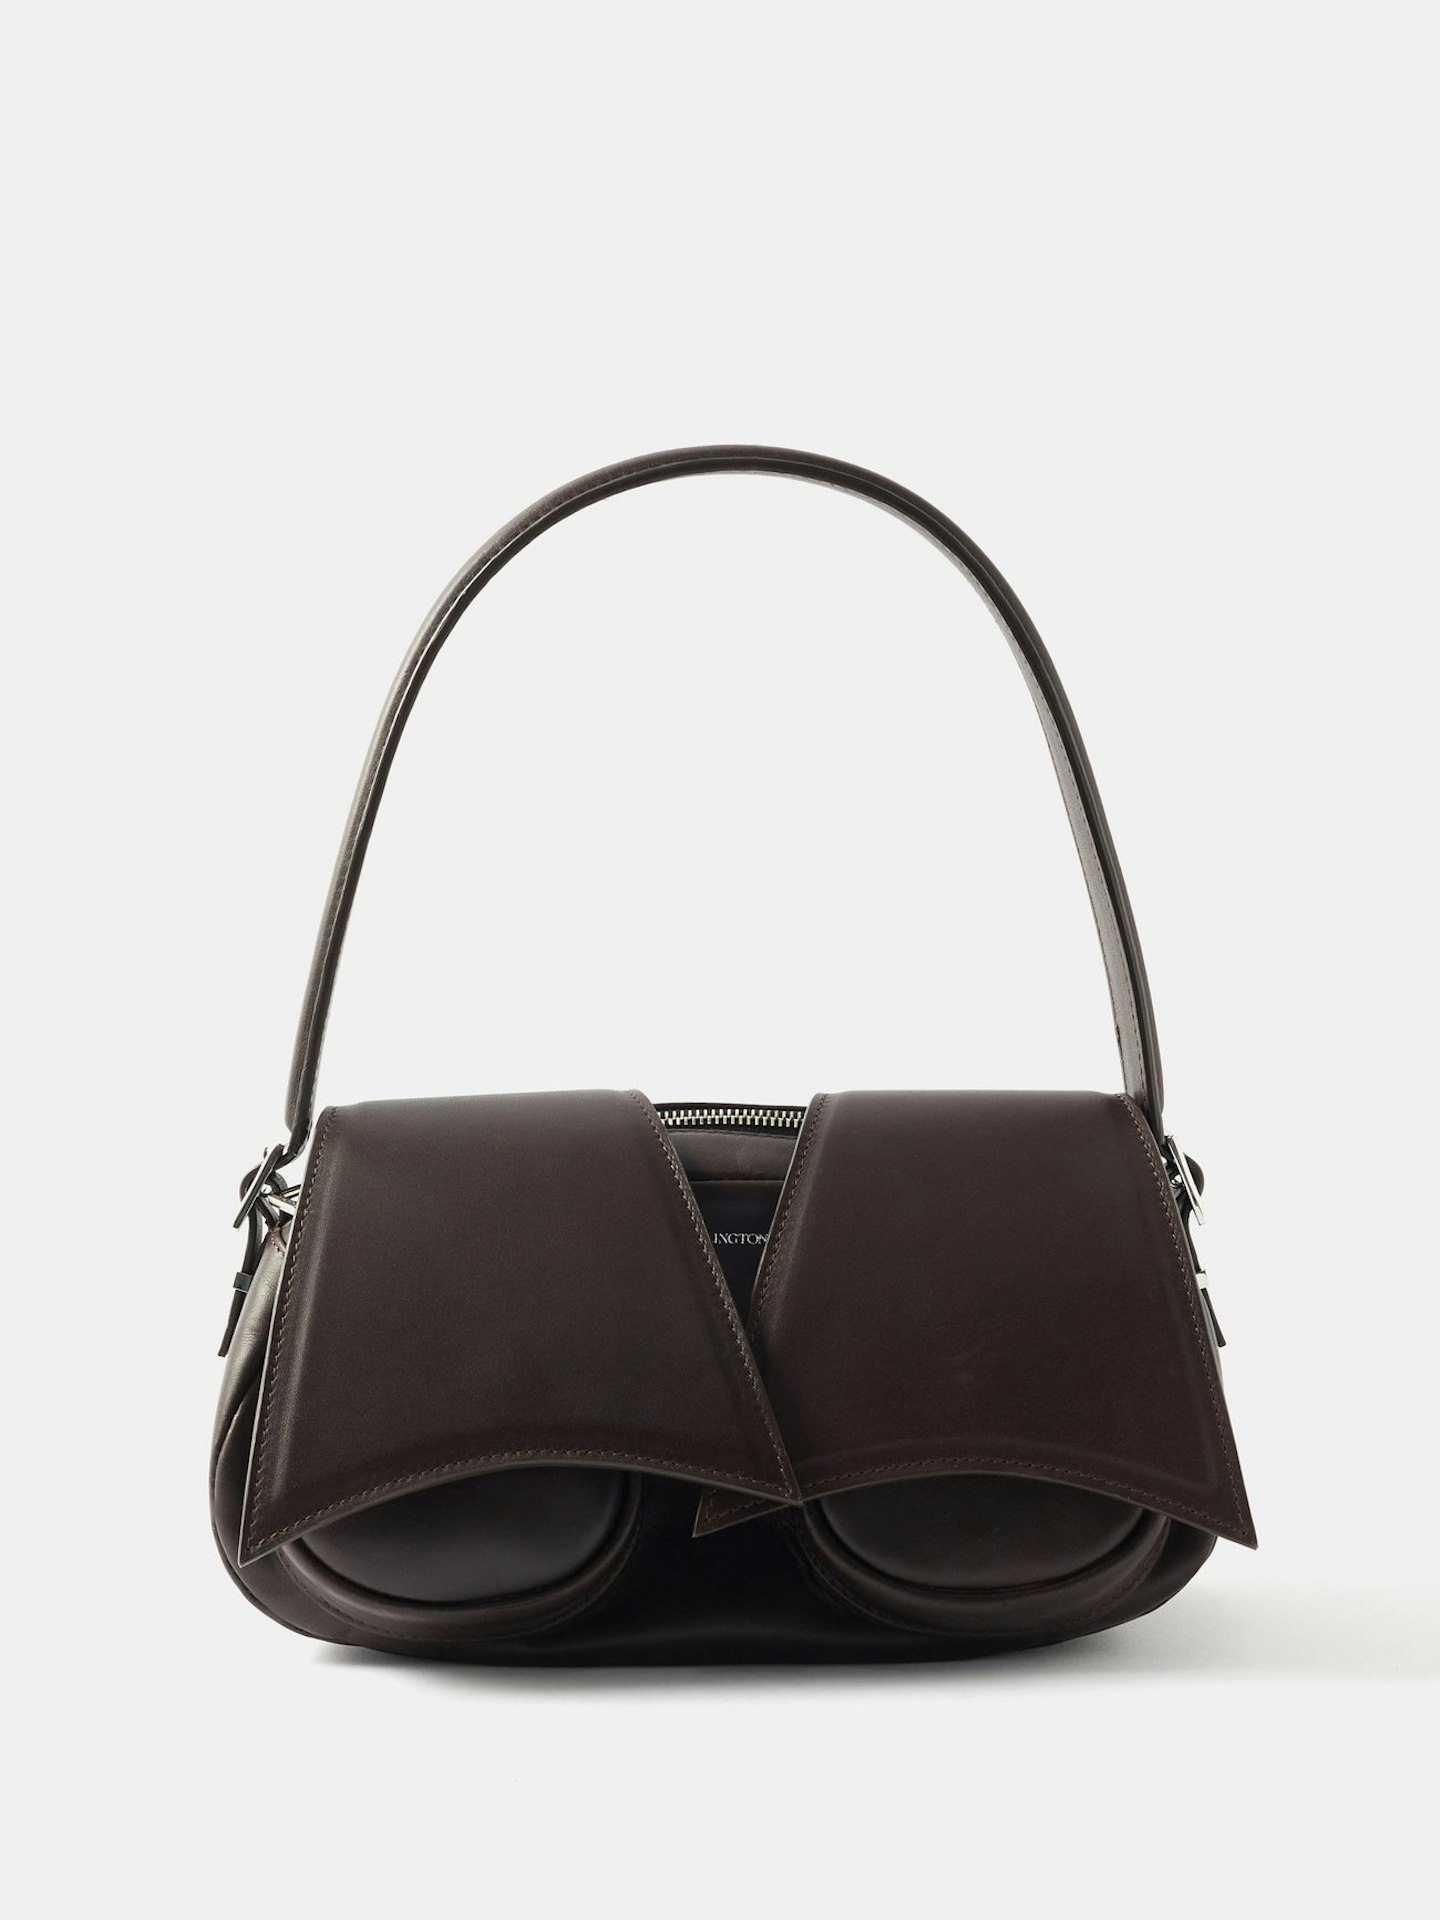 16Arlington, Kikka Small Leather Shoulder Bag